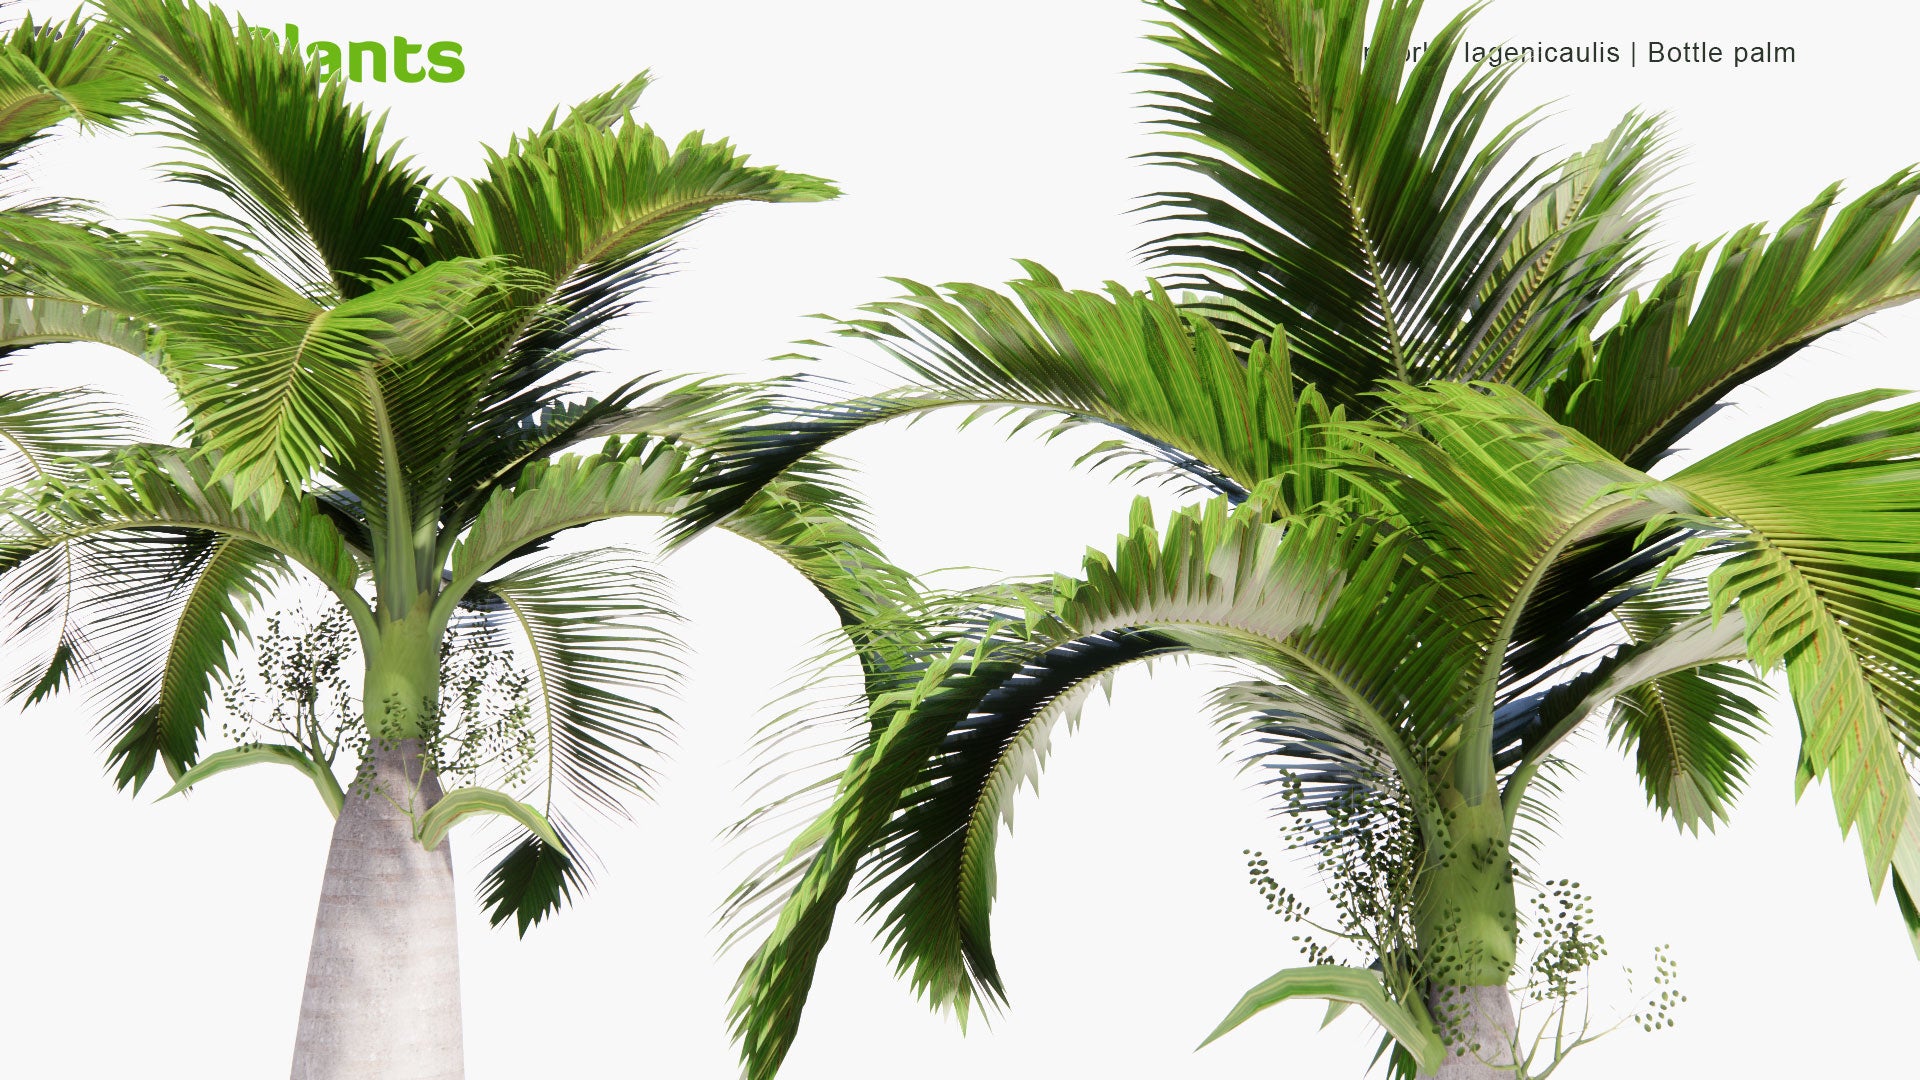 Low Poly Hyophorbe Lagenicaulis - Bottle Palm, Palmiste Gargoulette (3D Model)